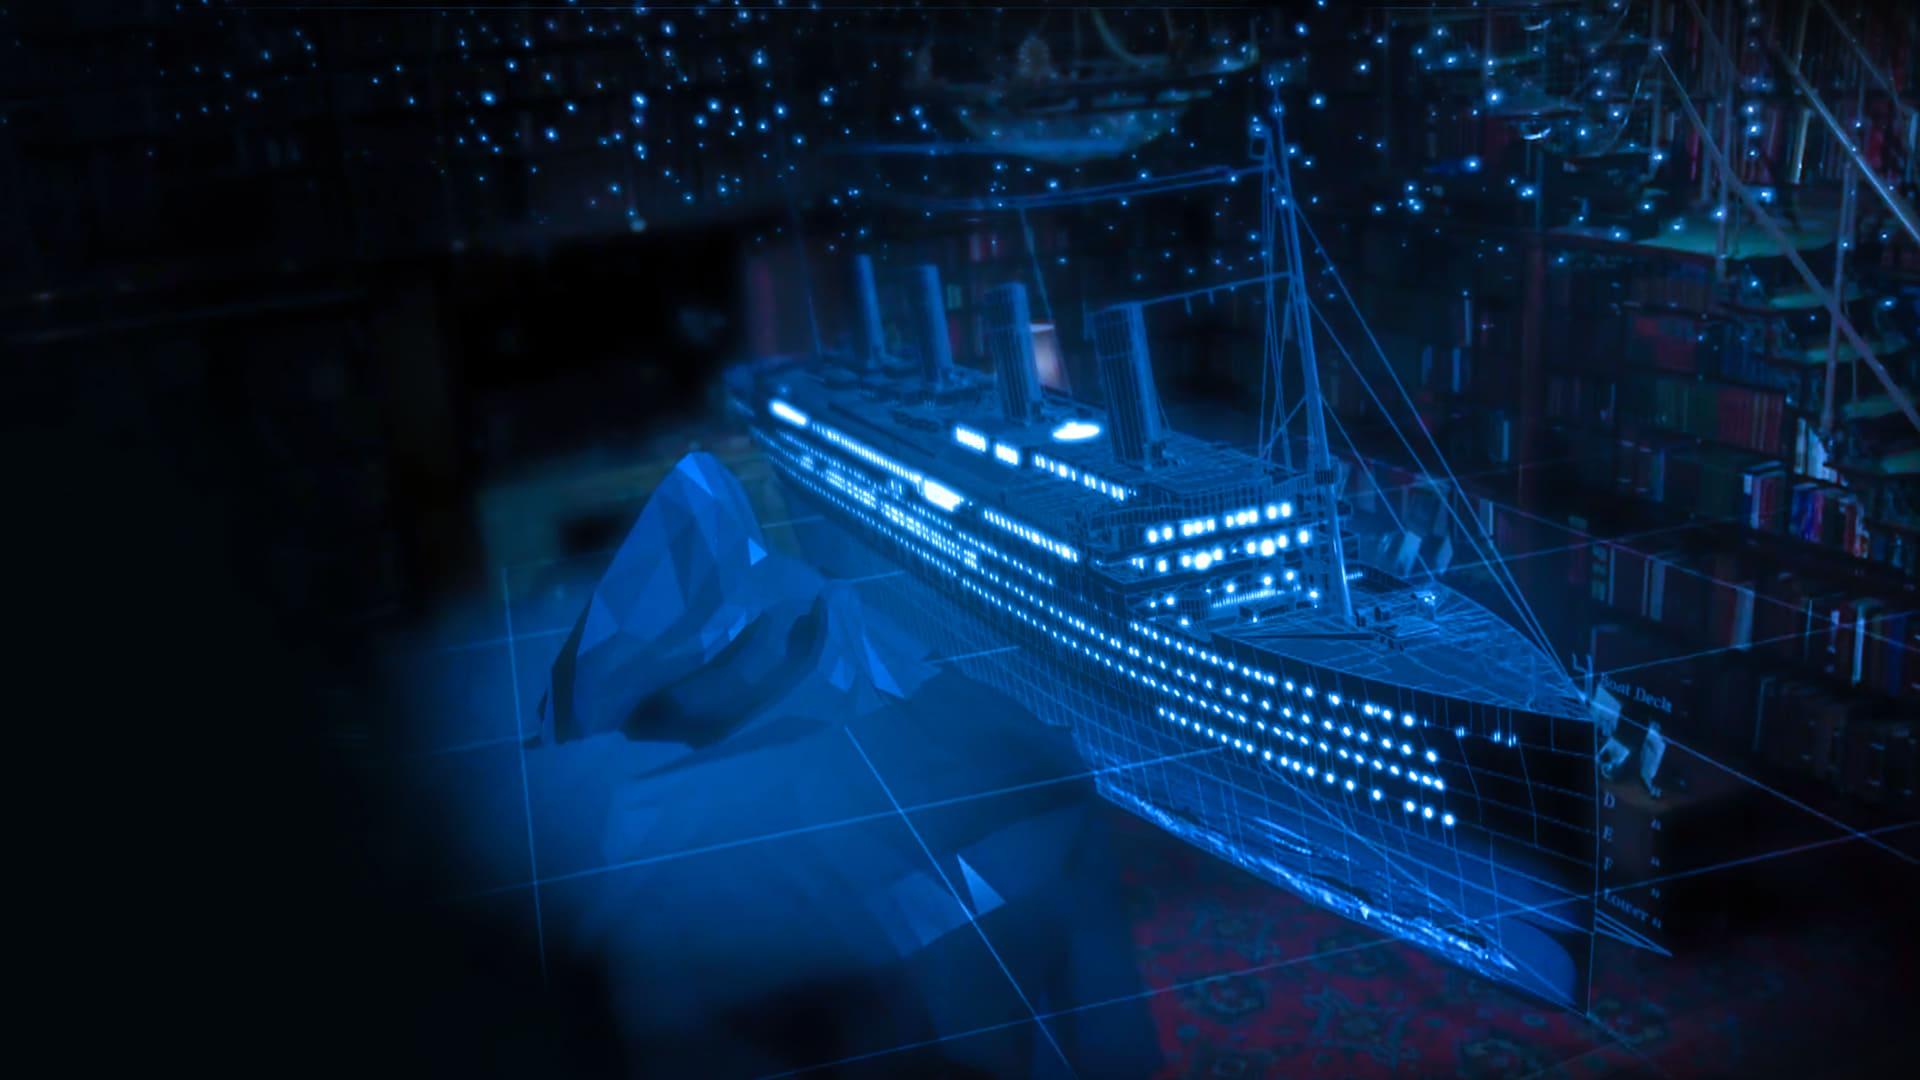 Titanic's Final Mystery backdrop